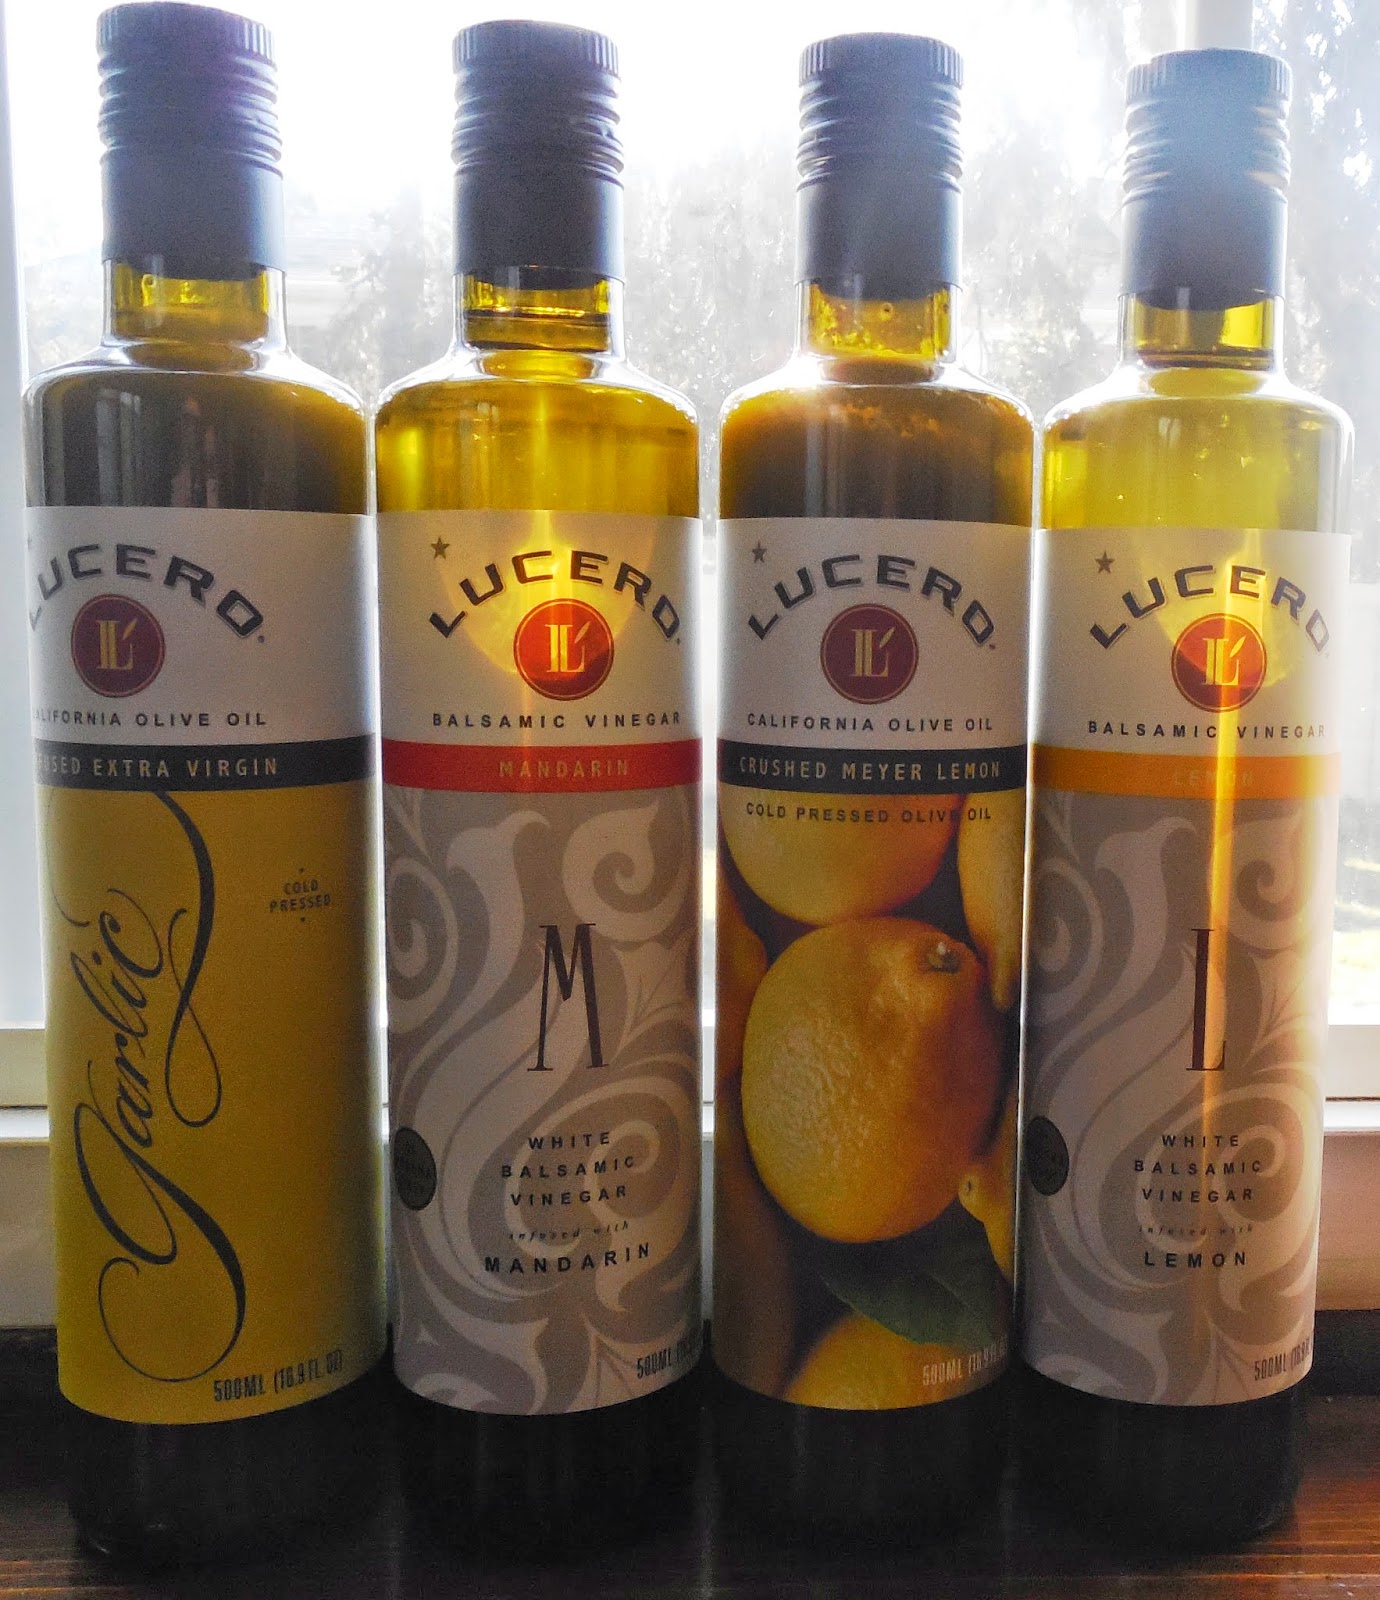 Lucero Olive Oil